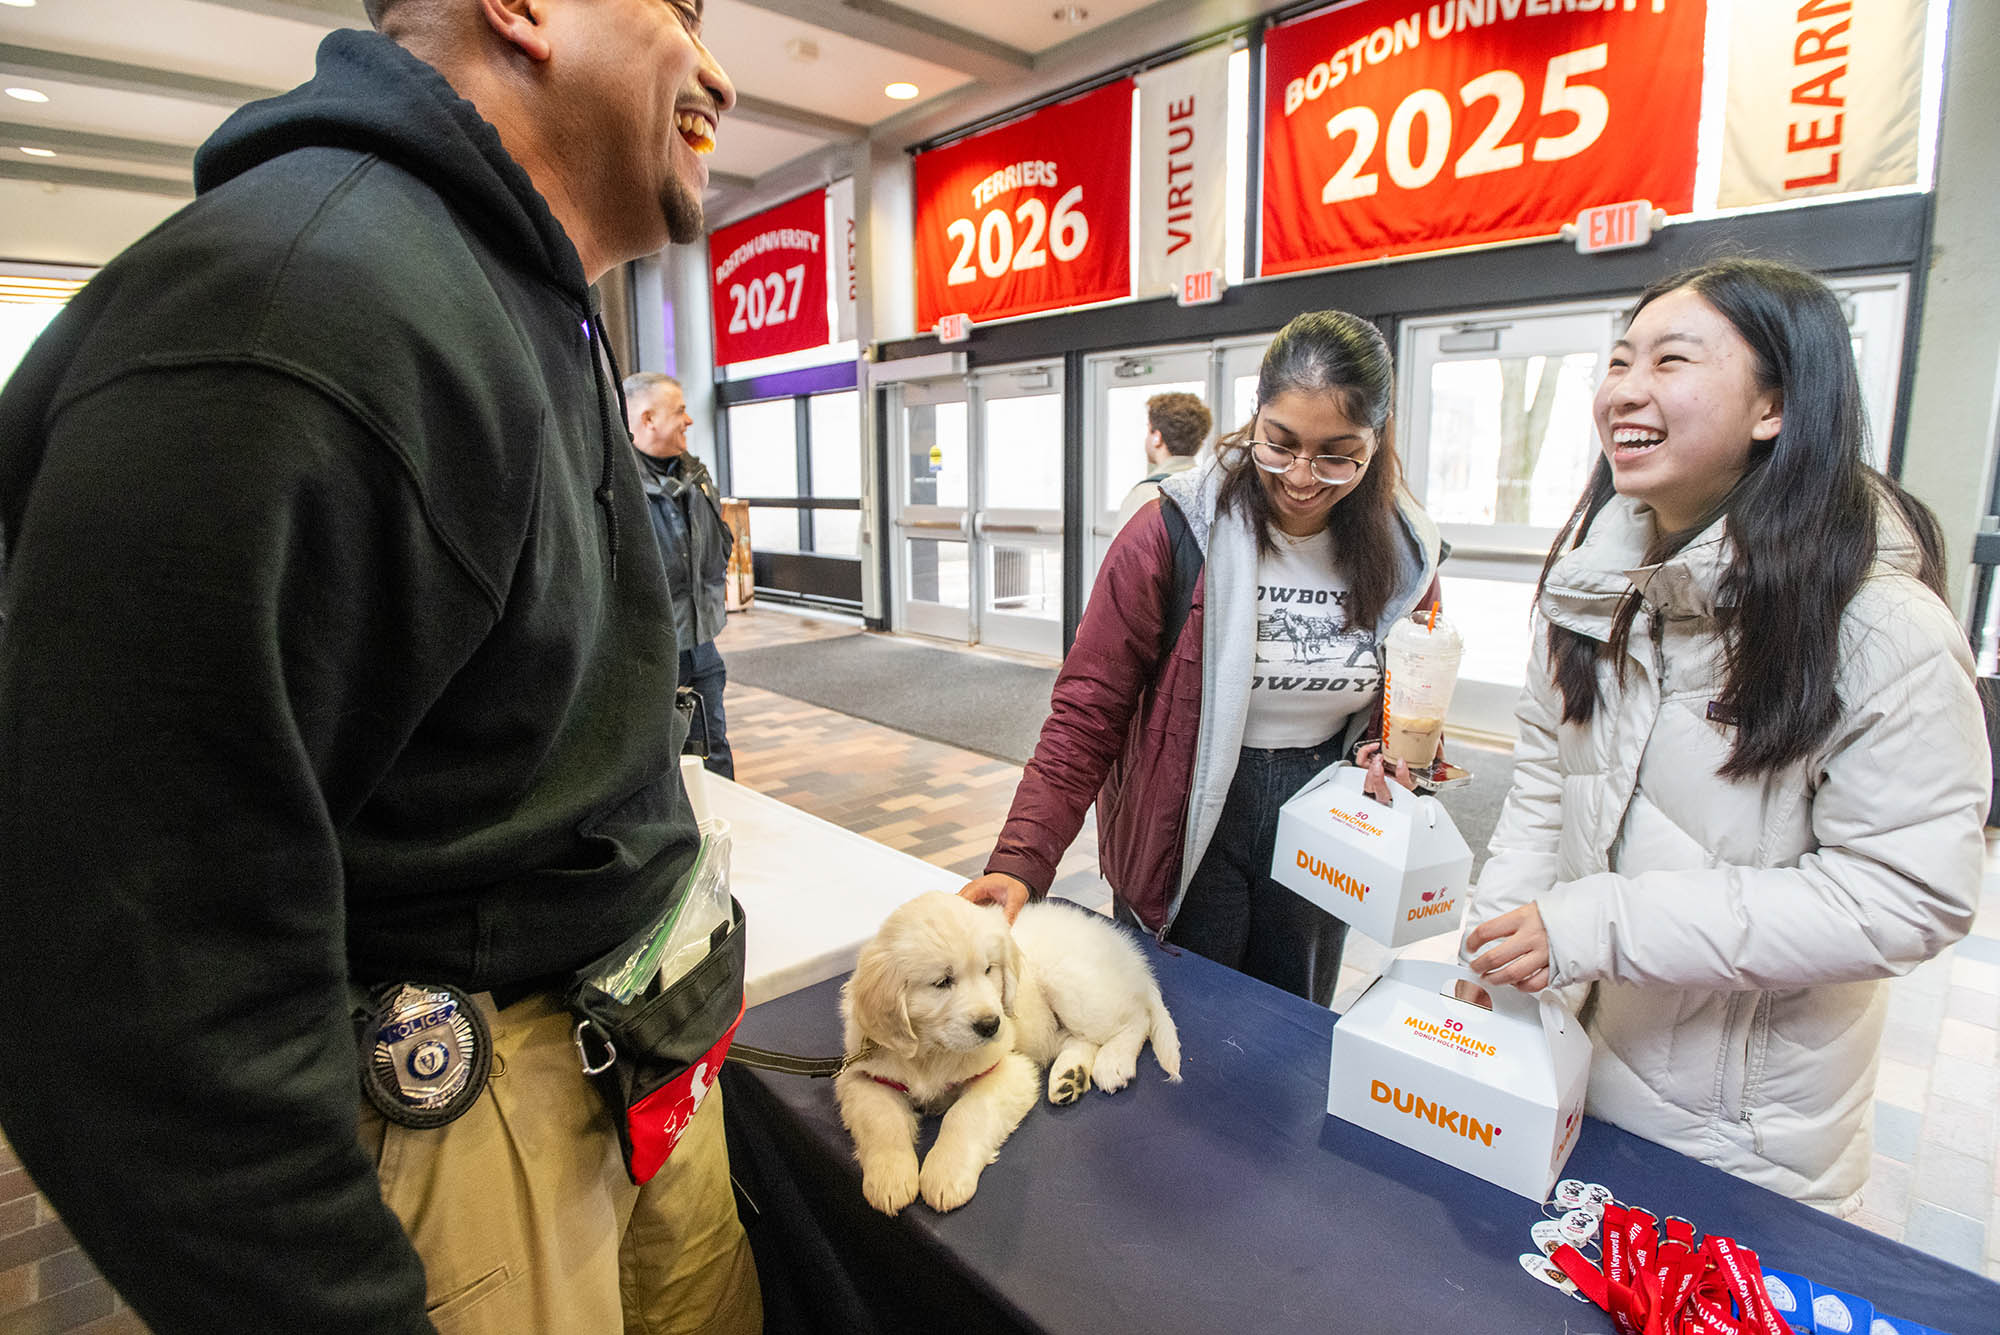 Photo: Patrolmen watch over as BU students pet their new comfort dog, a white, fluffy golden retriever.